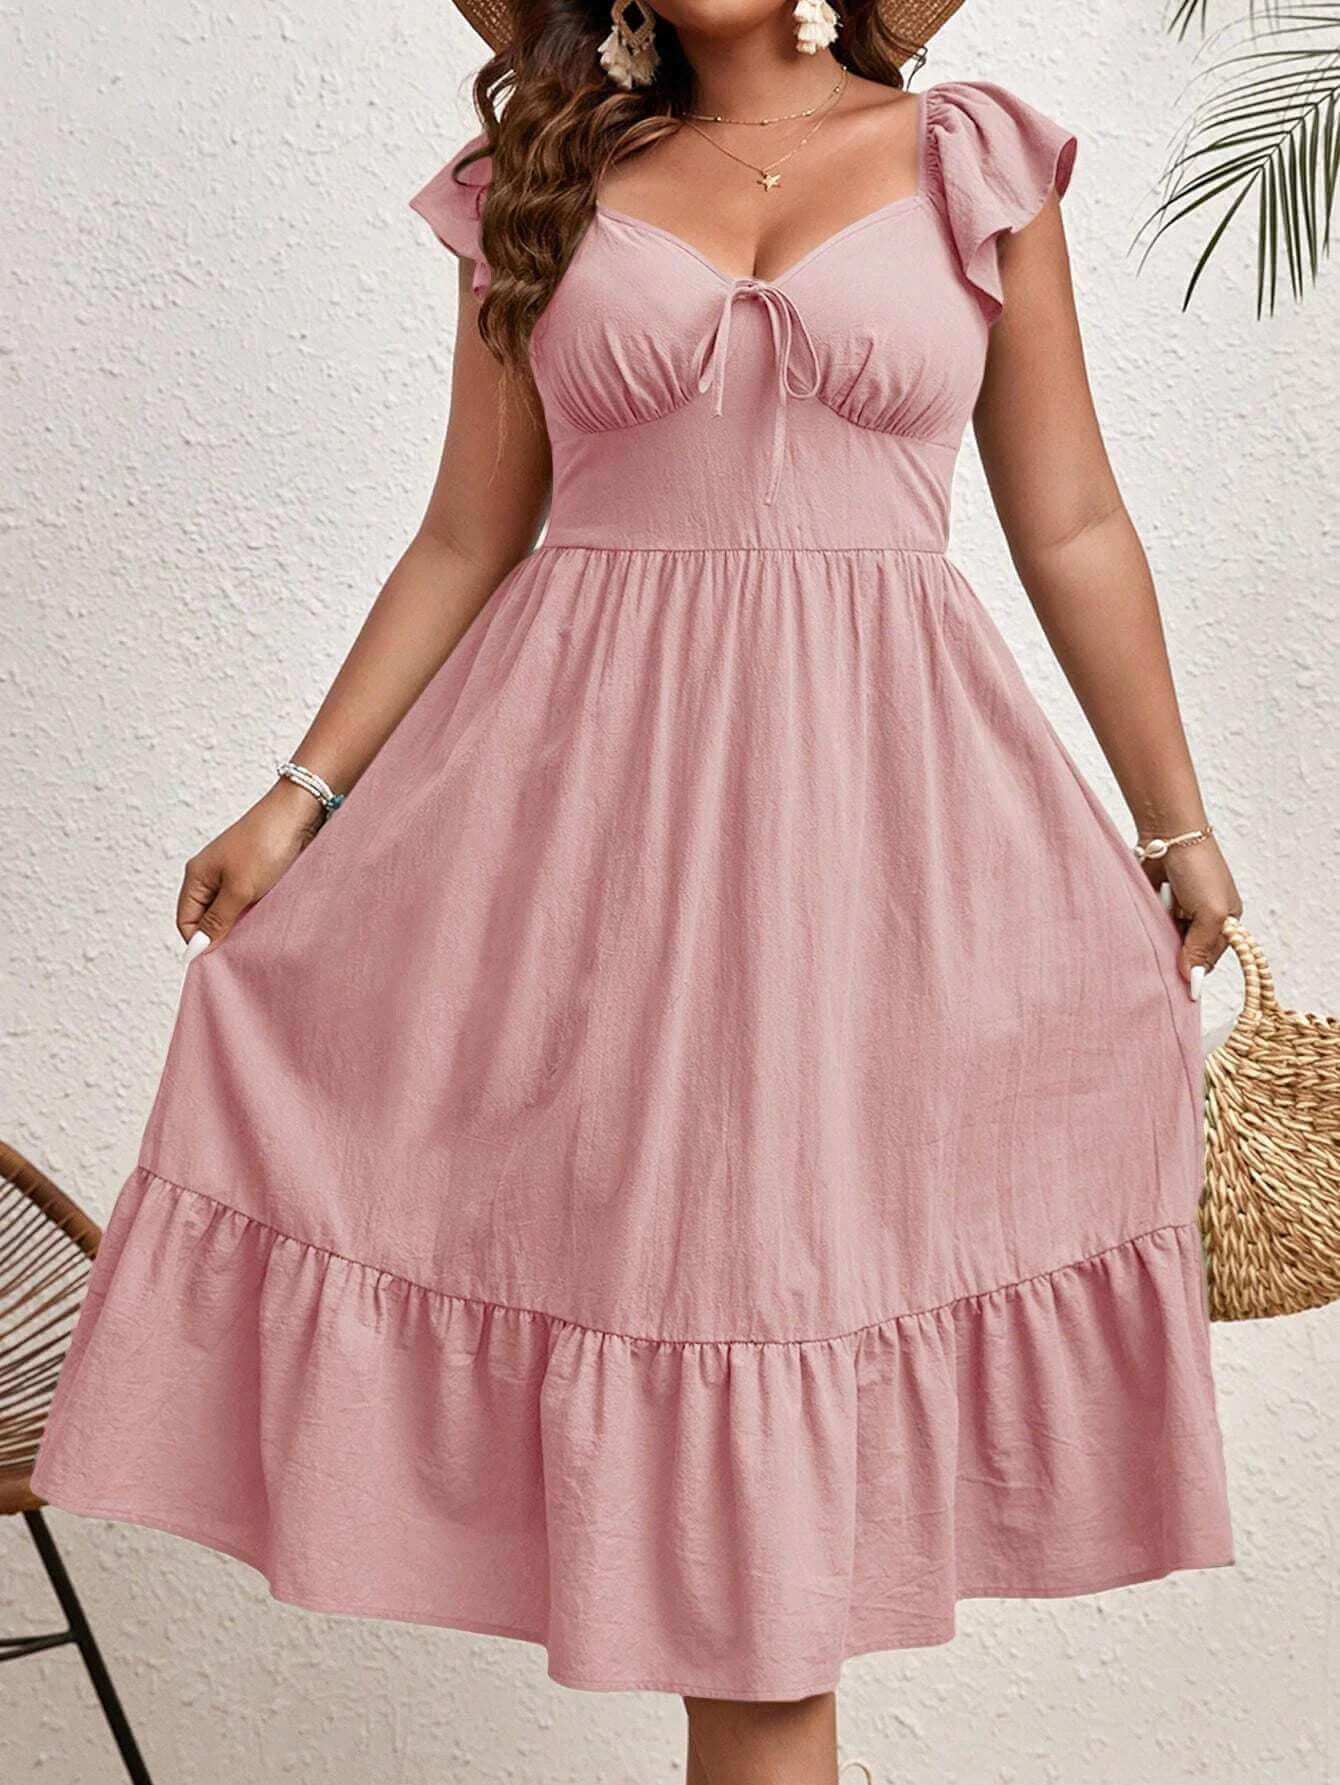 Elegant Summer Plus Size Dress - Sweetheart Neckline & Tie Cap Sleeves